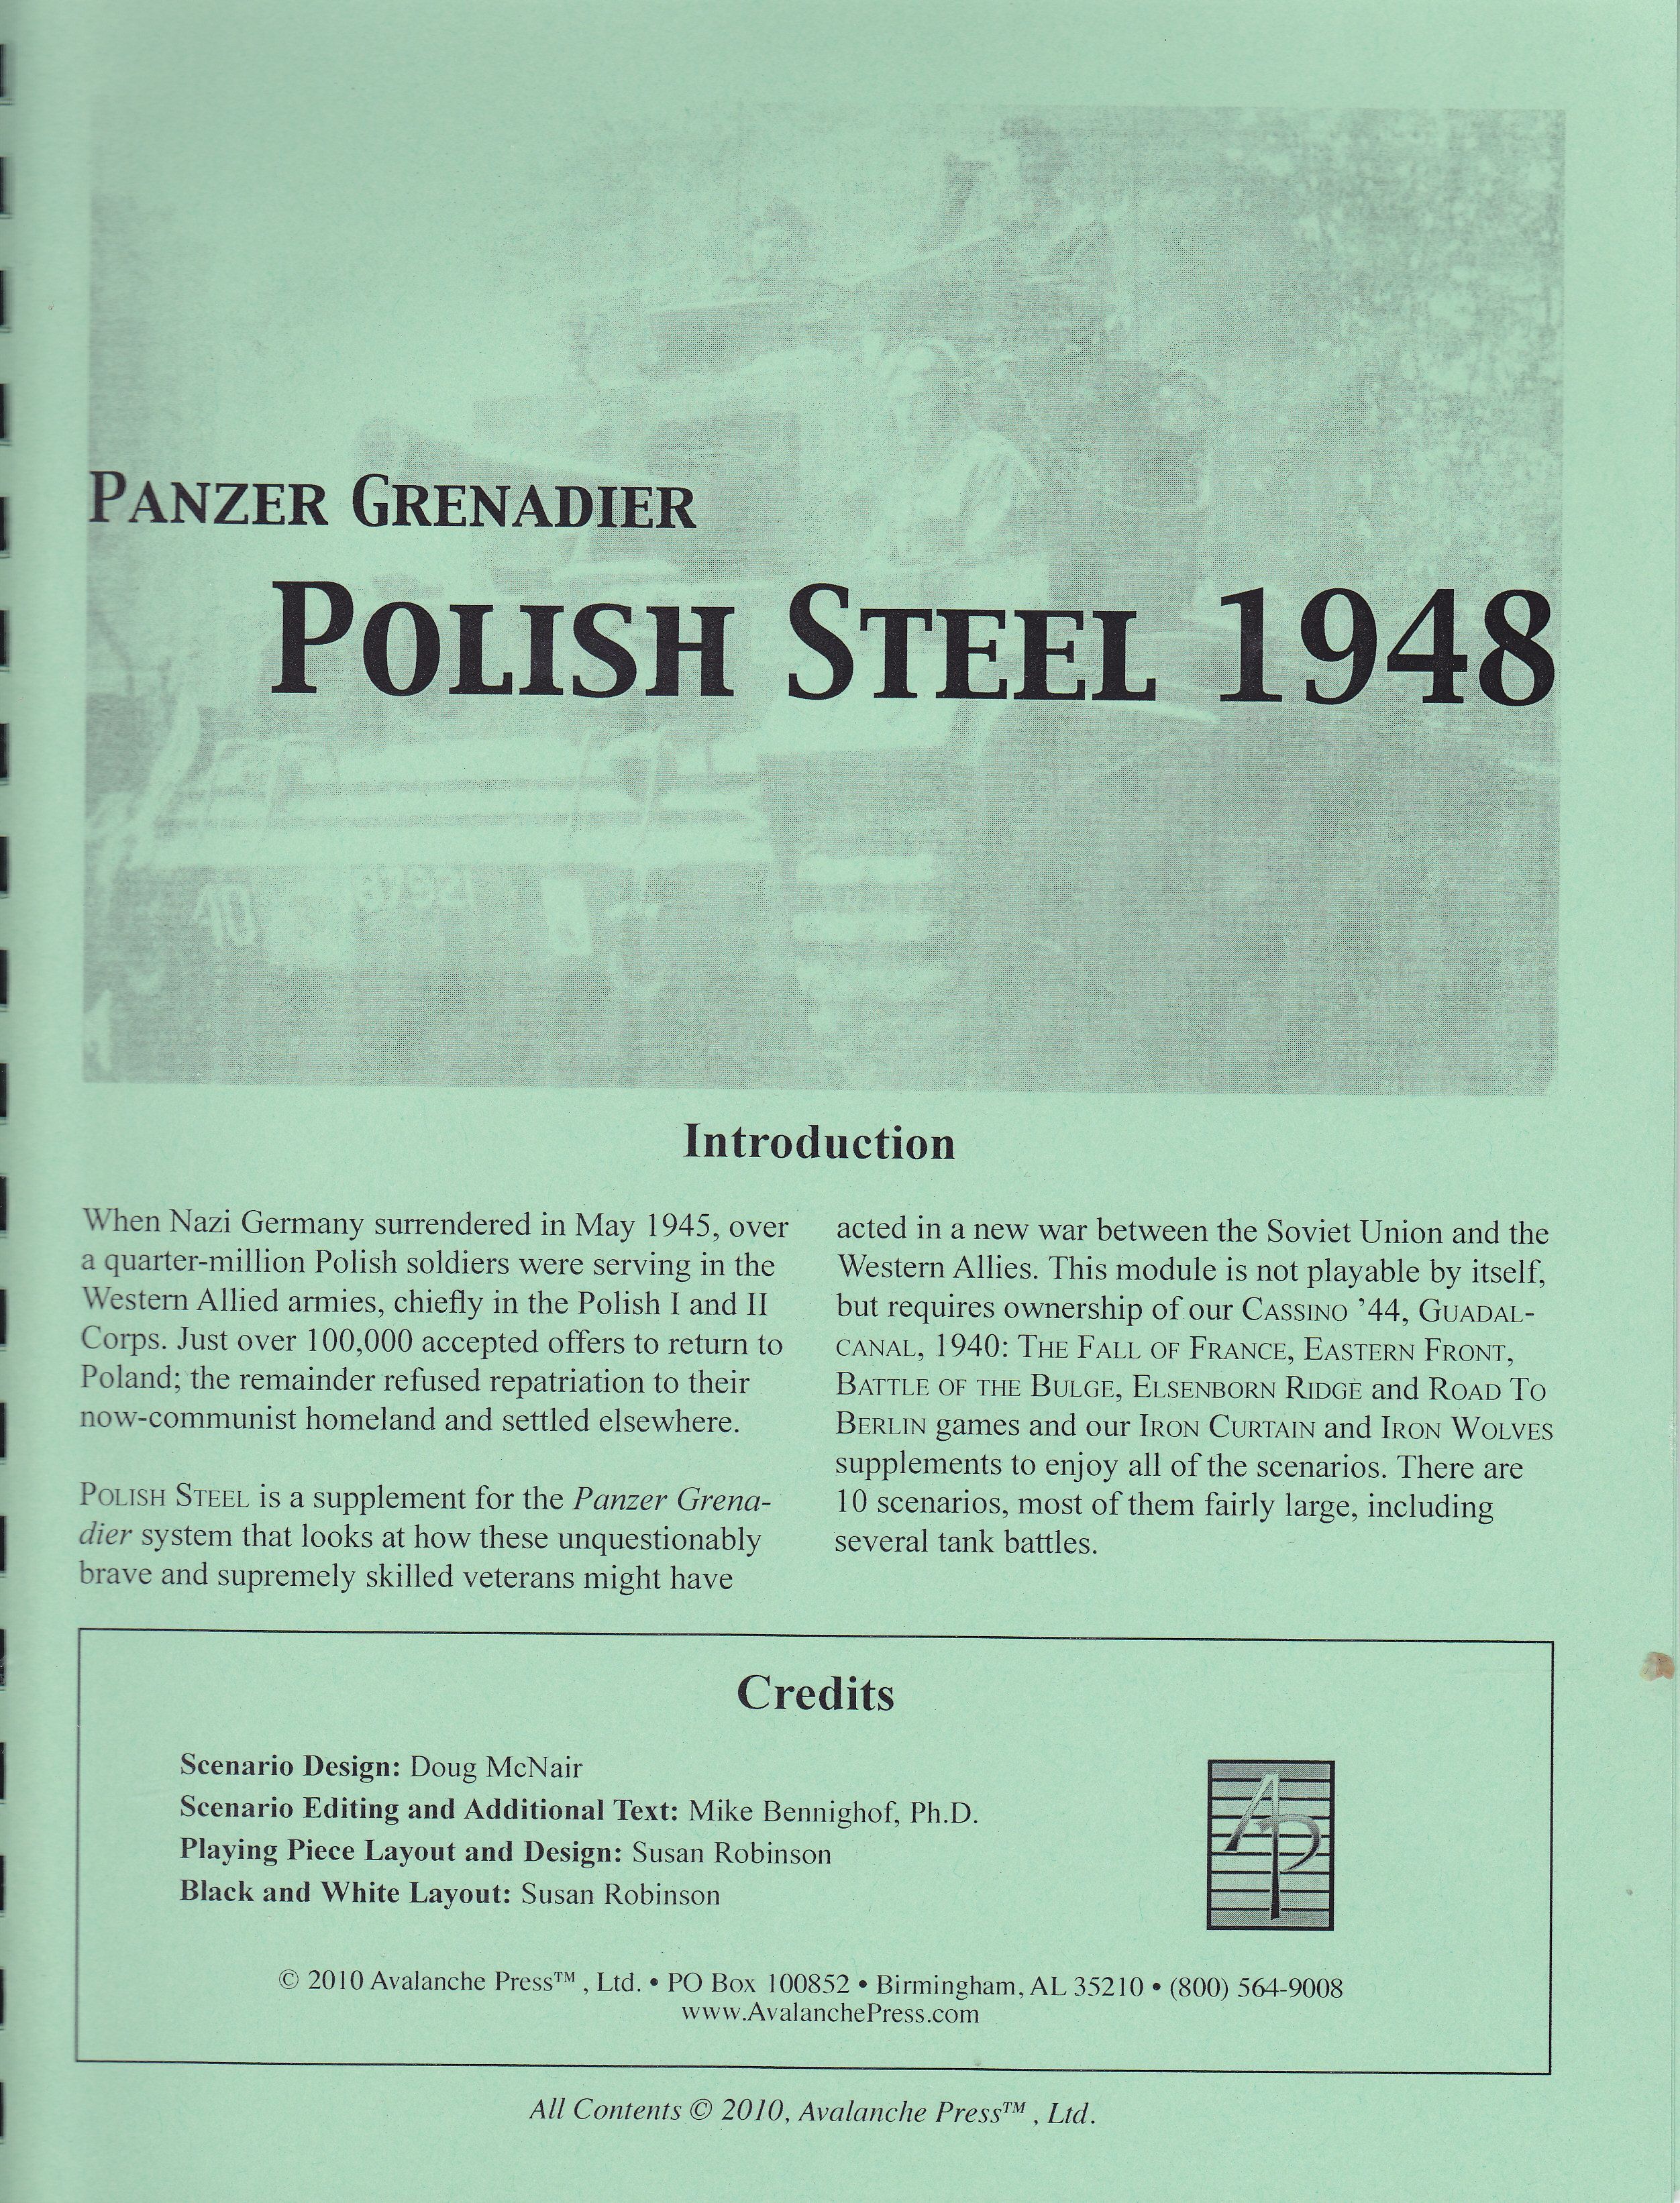 Panzer Grenadier: Polish Steel 1948